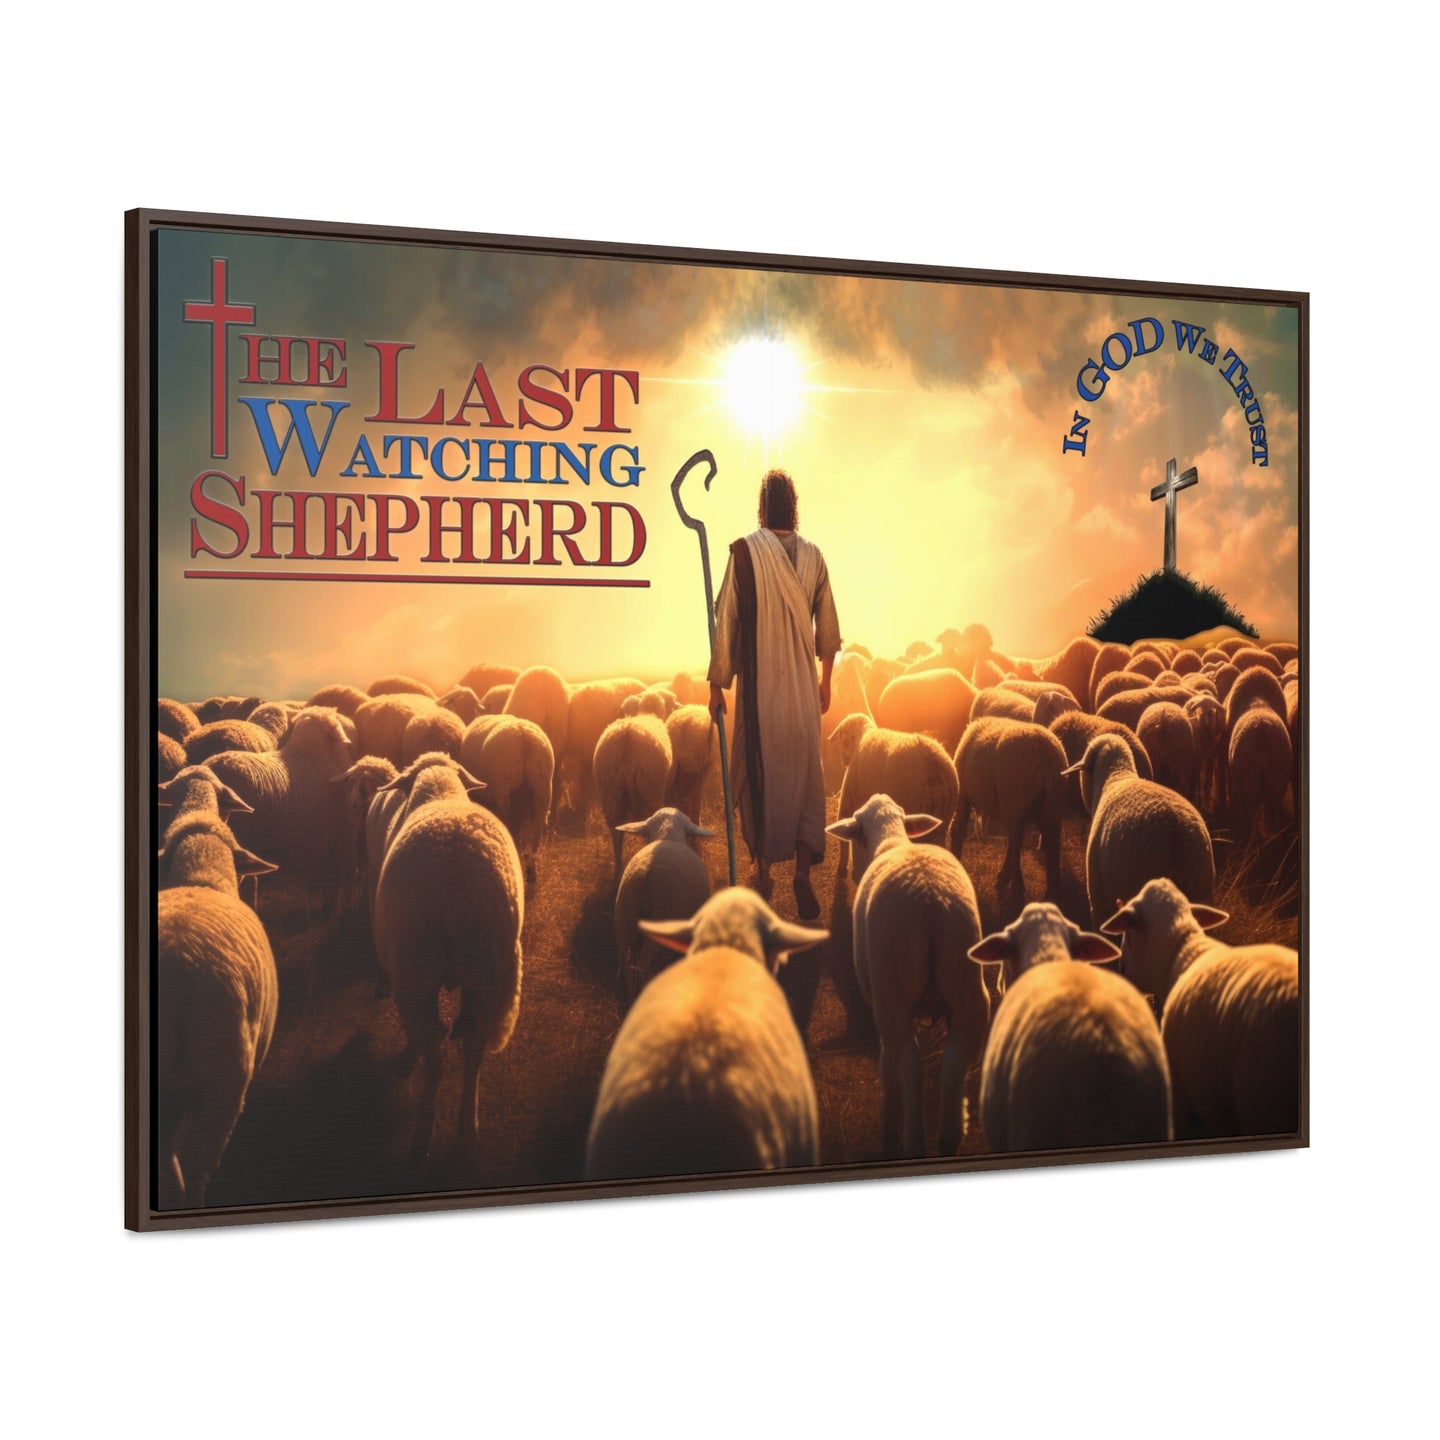 The Last Watching Shepherd